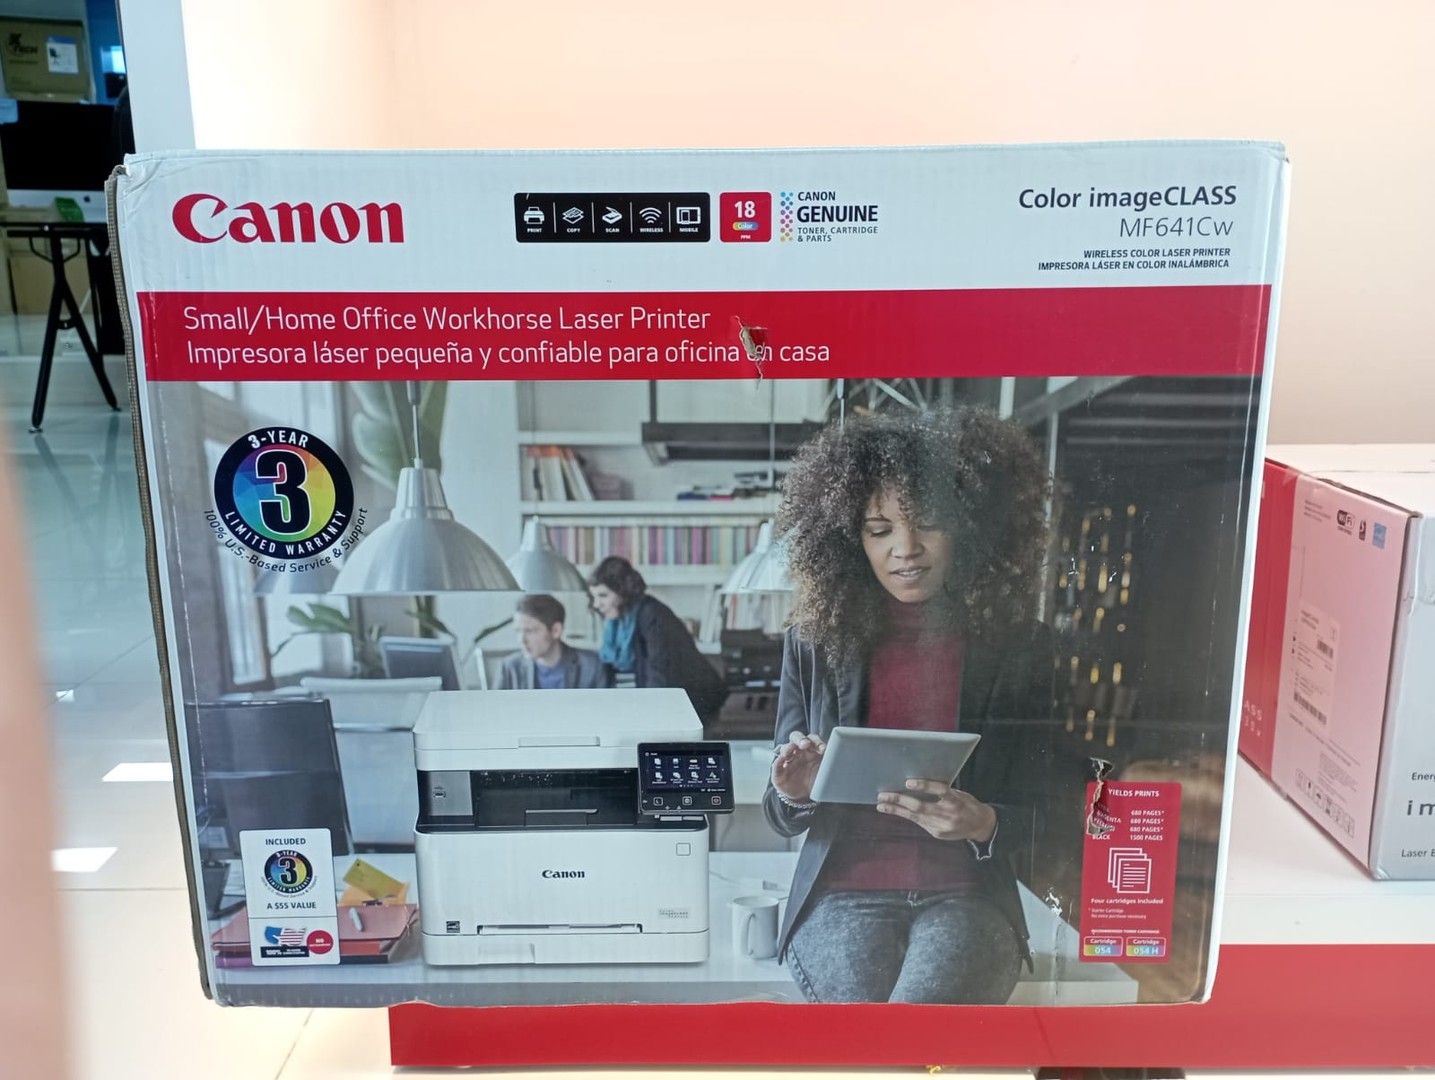 Impresora Canon Laser color imagenclass MF641CW multifuncional